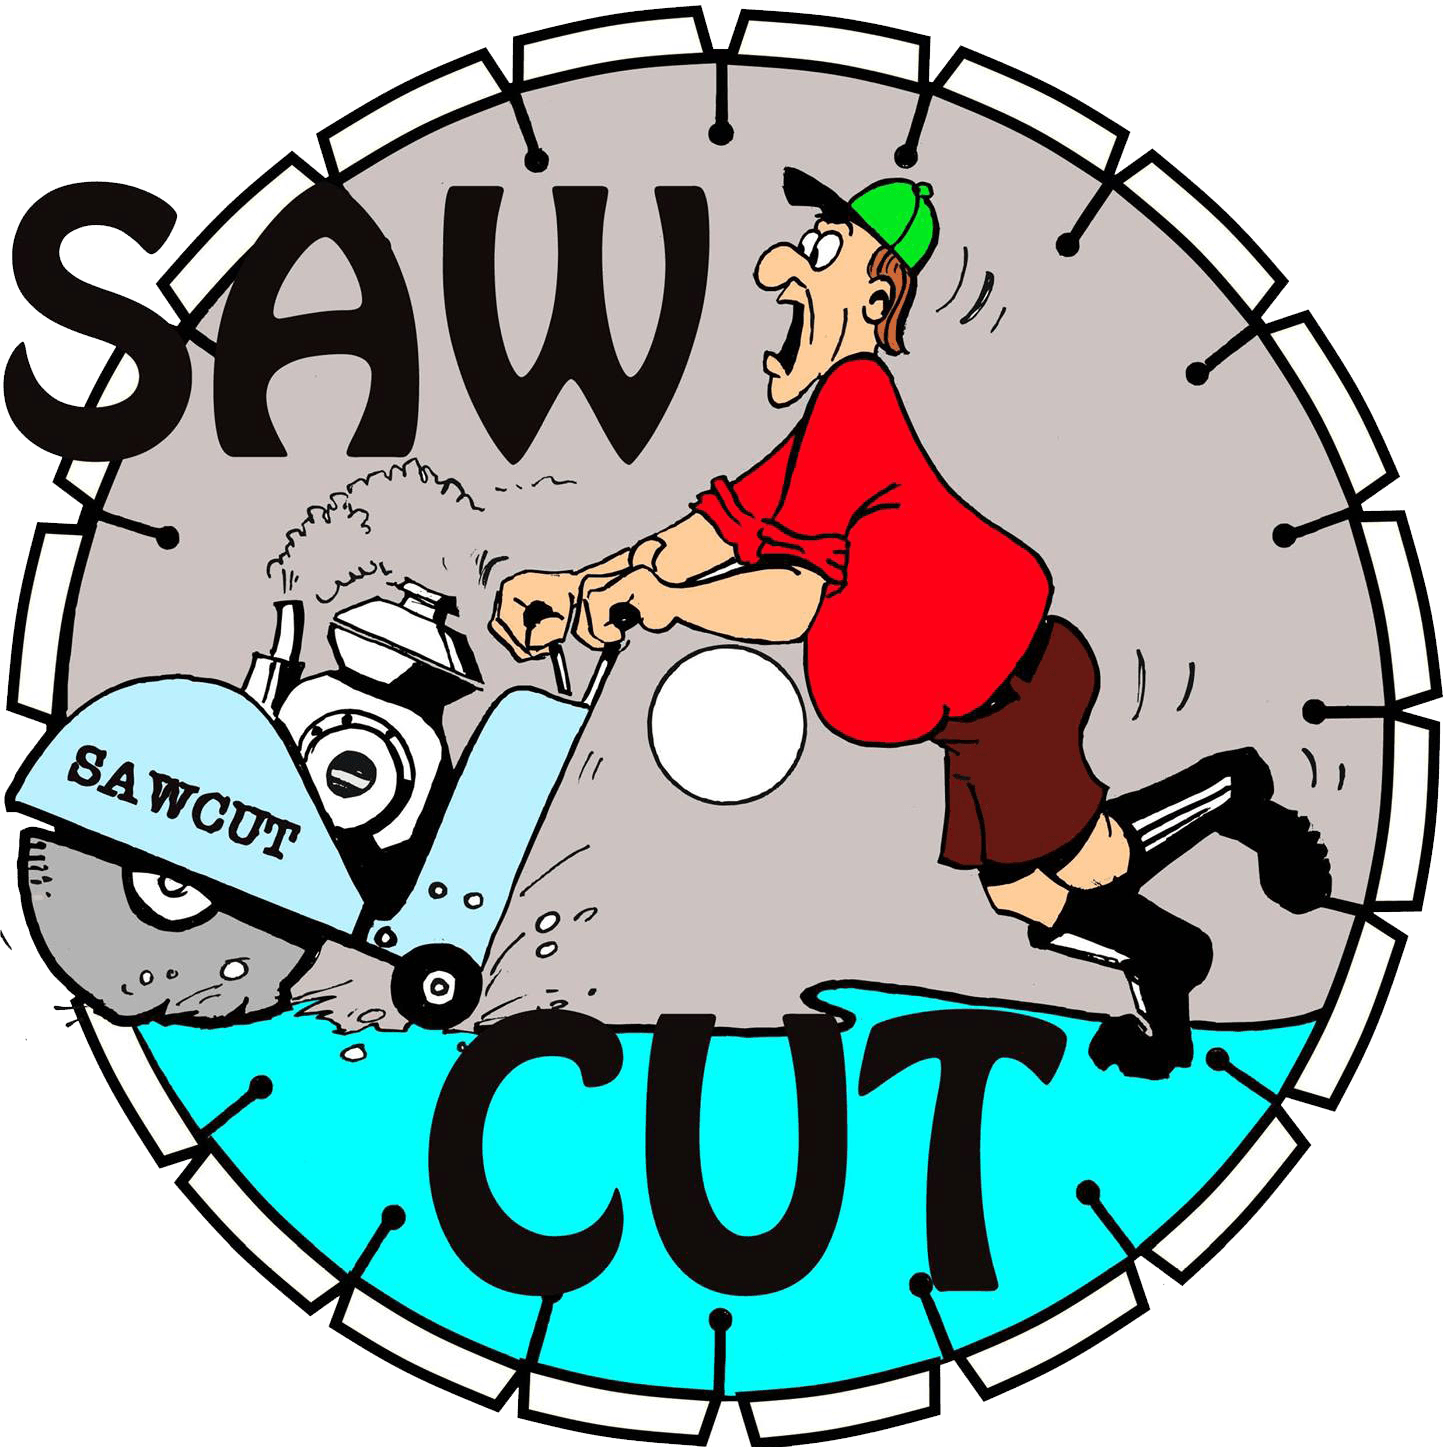 Sawcut: Professional Concrete Cutters